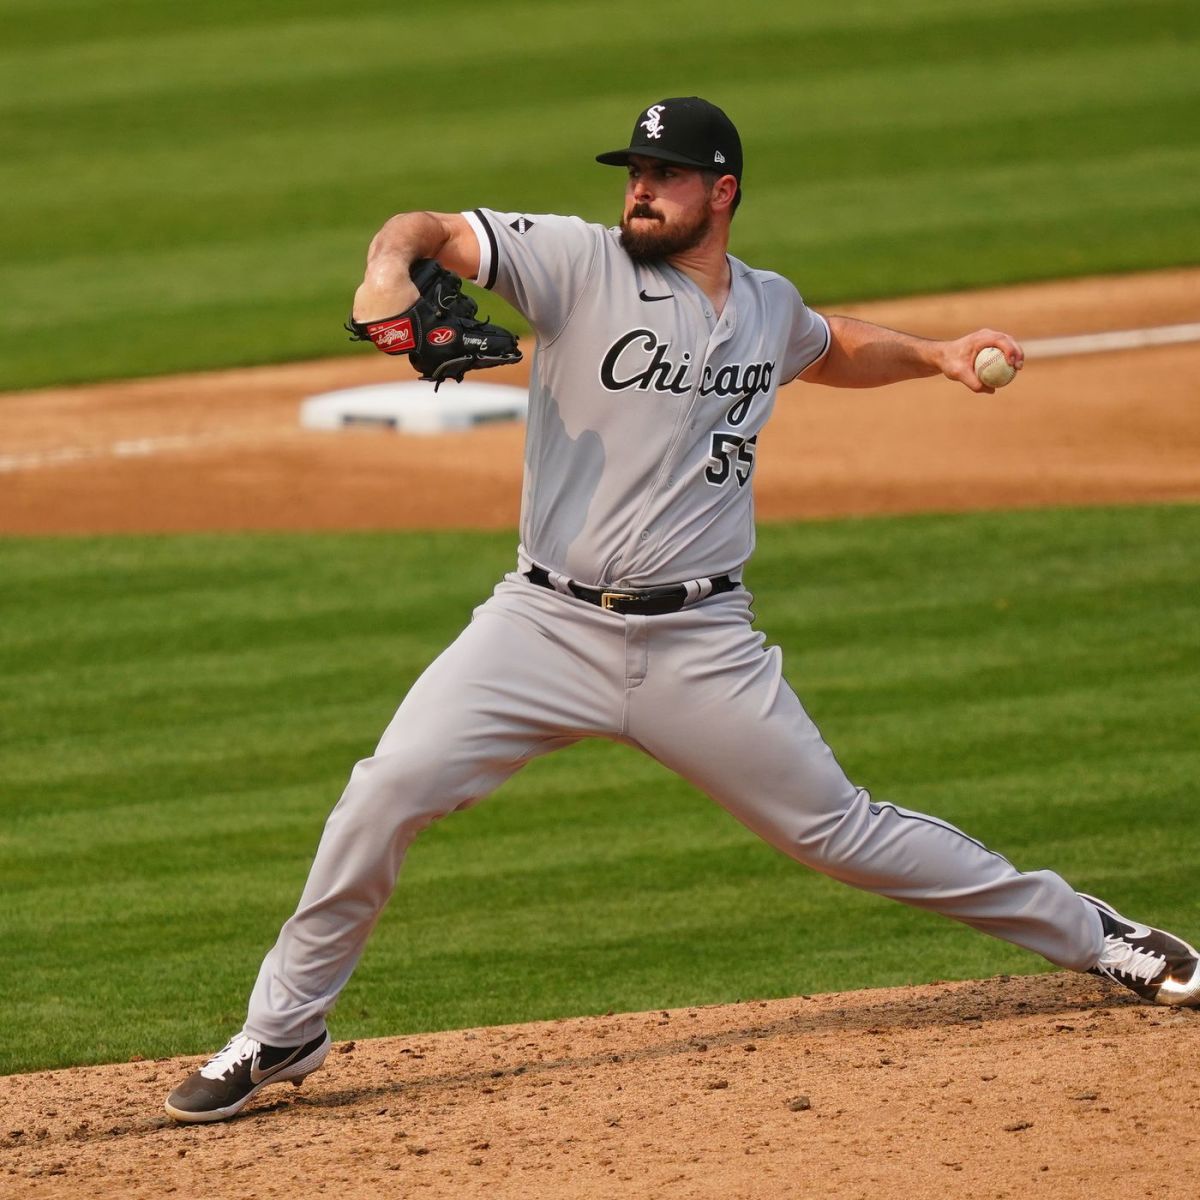 Photo: Daniel Shirey/MLB Photos via Getty Images